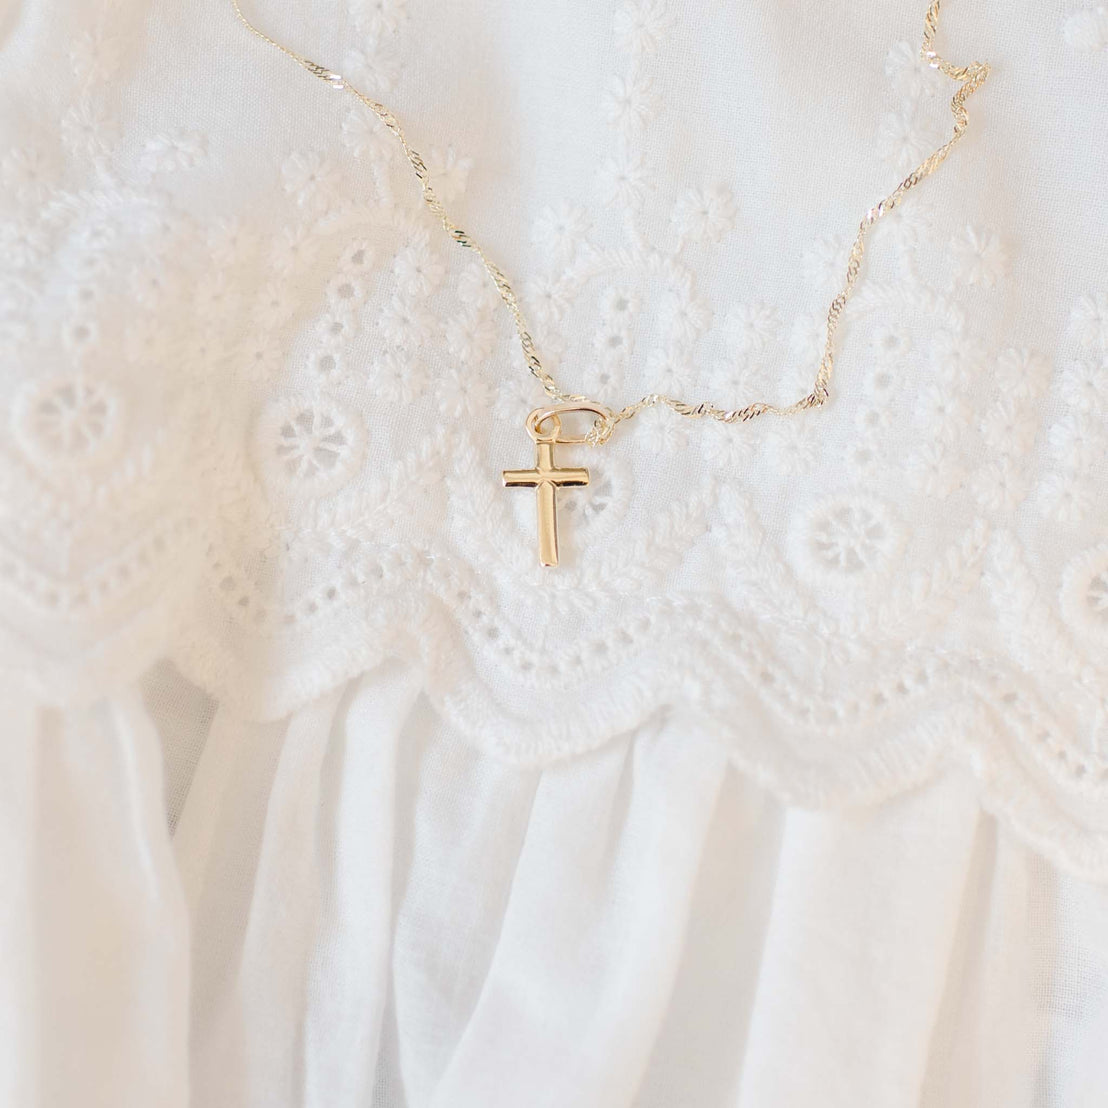 Tiny gold cross charm on chain